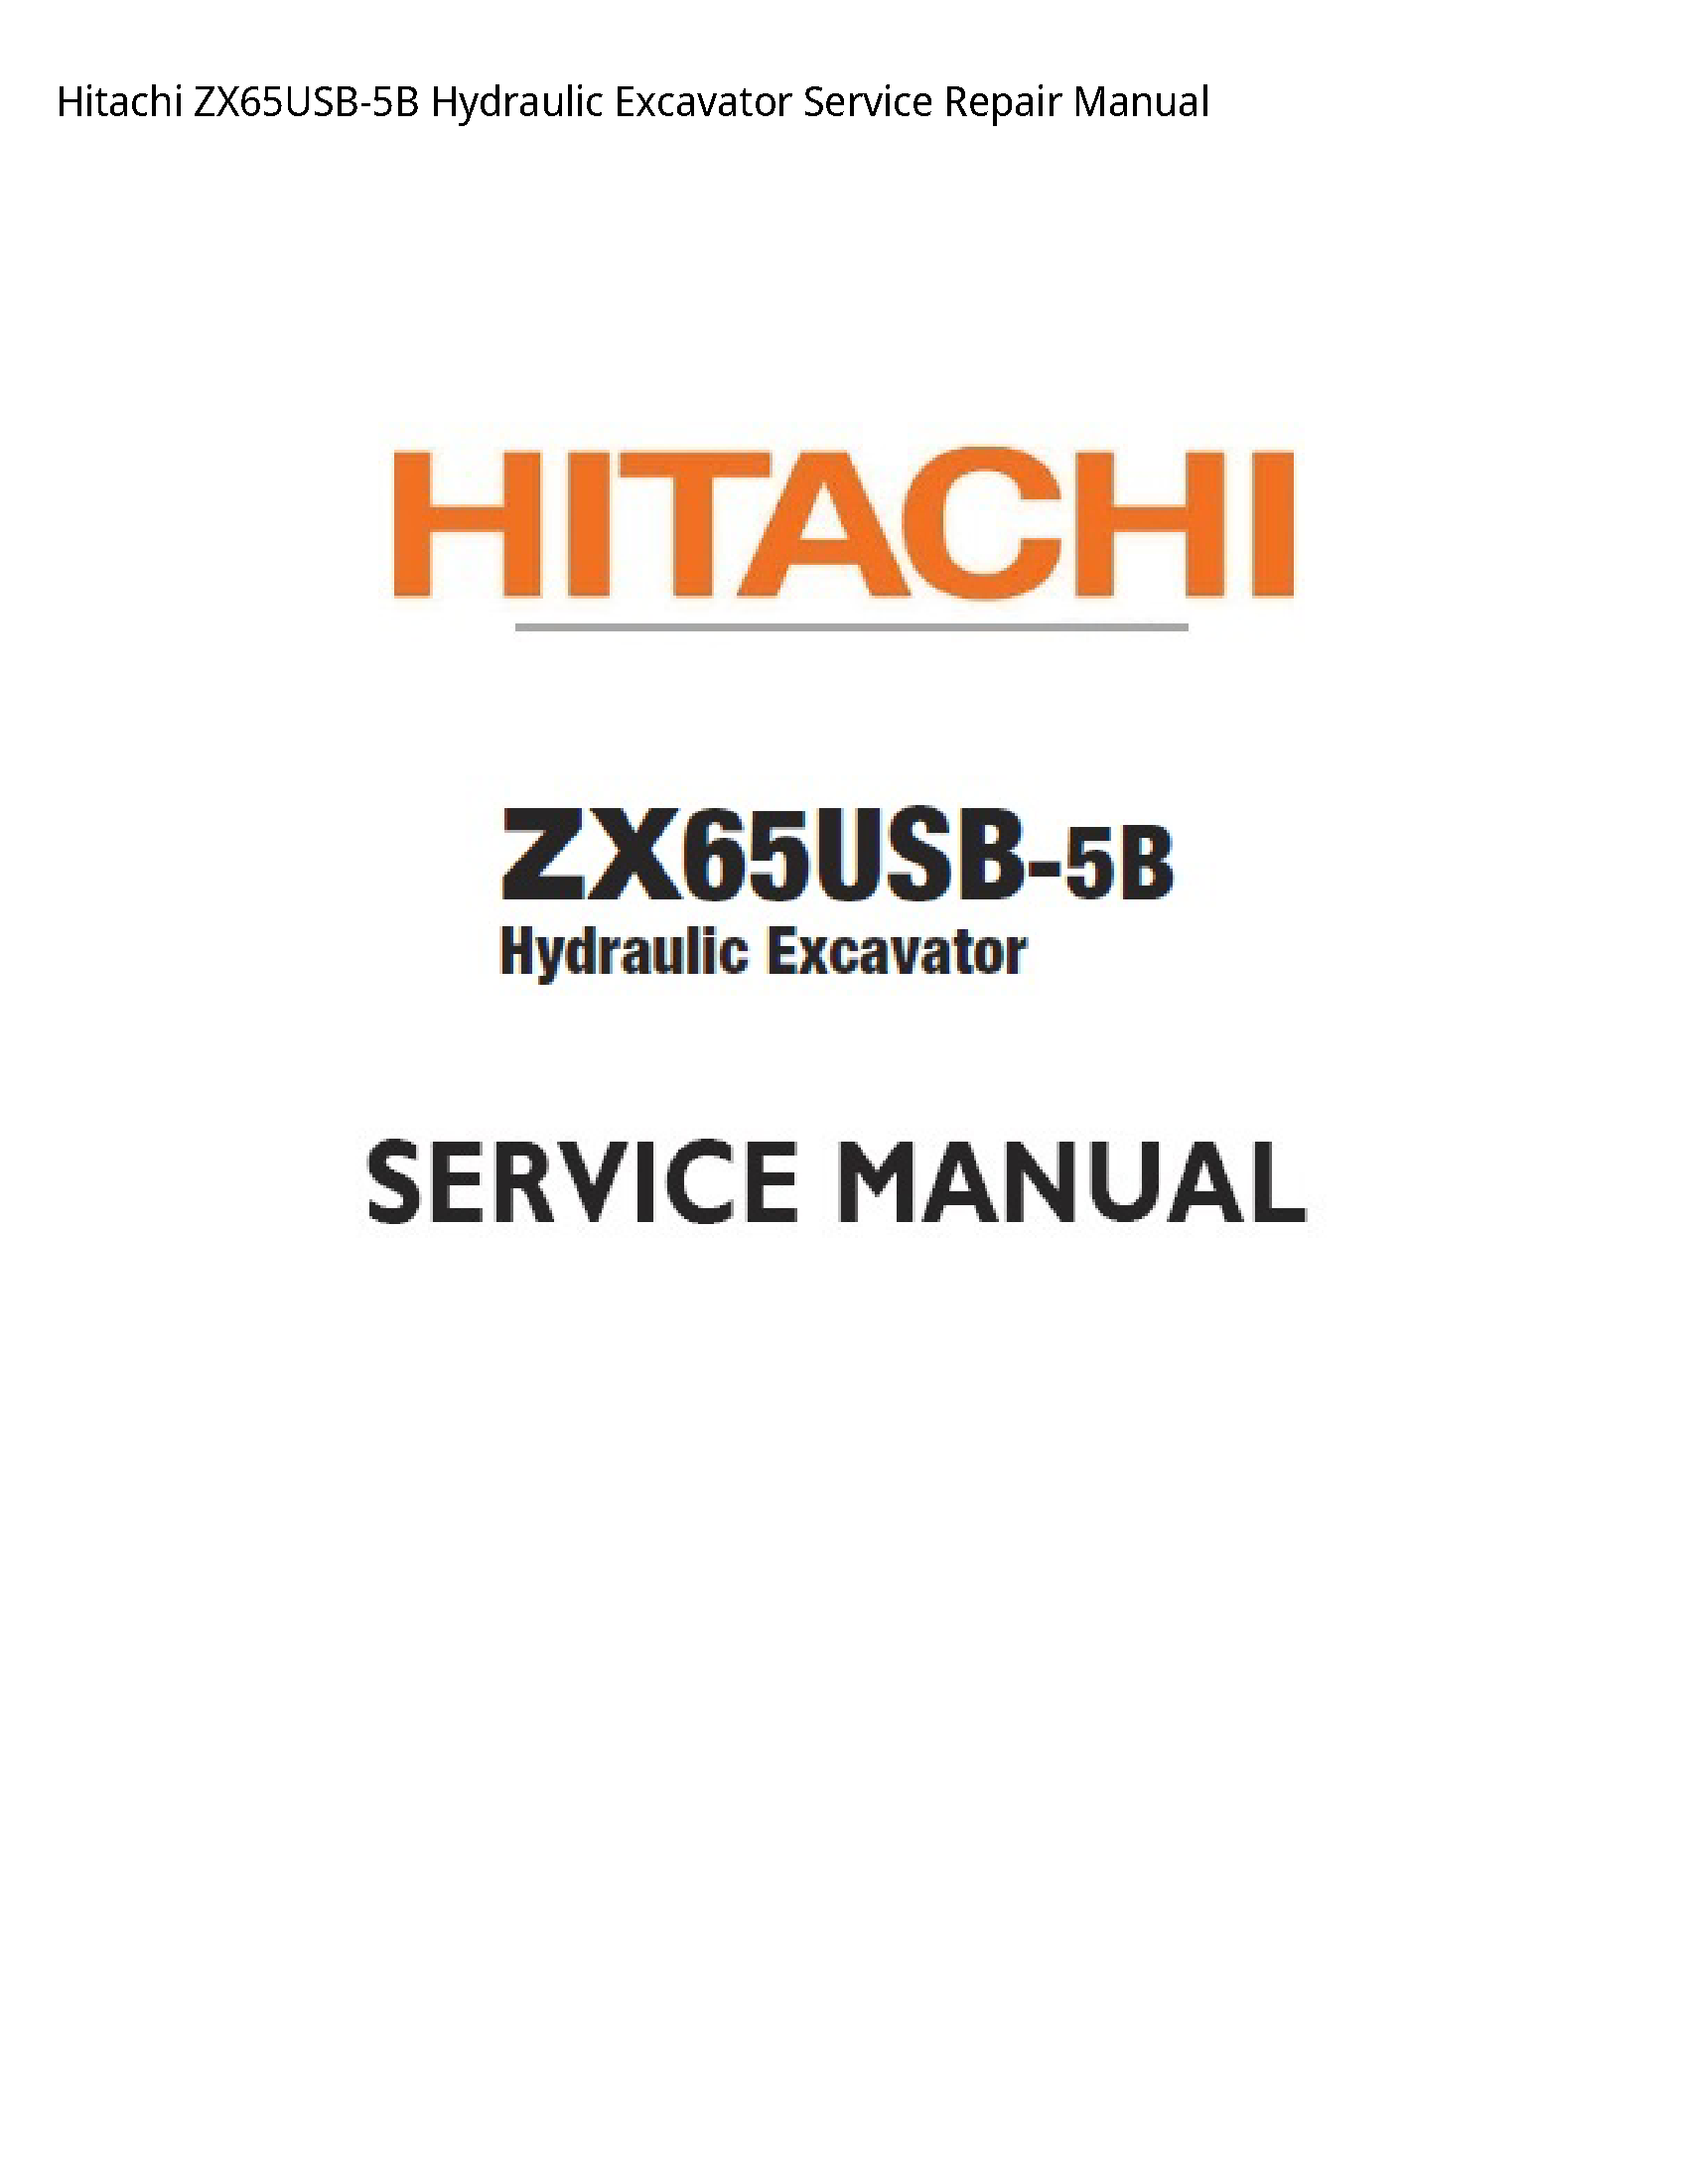 Hitachi ZX65USB-5B Hydraulic Excavator manual